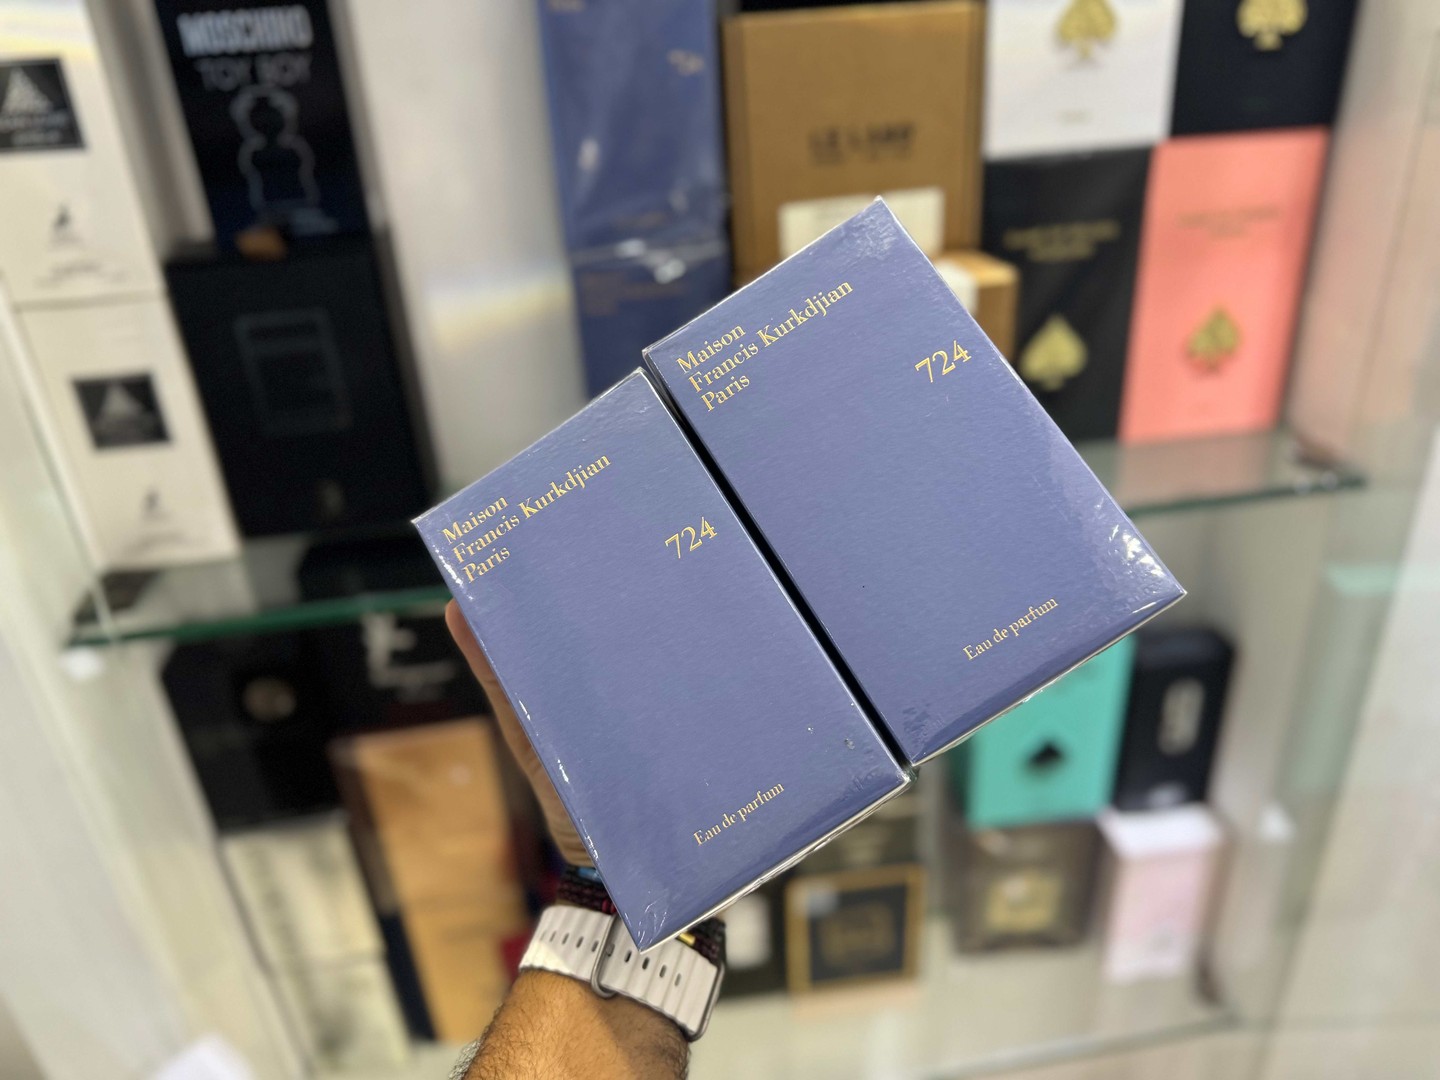 joyas, relojes y accesorios - Perfumes Maison Francis Kurkdjian Paris 724 Nuevos 70ml Originales $ 21,500 NEG